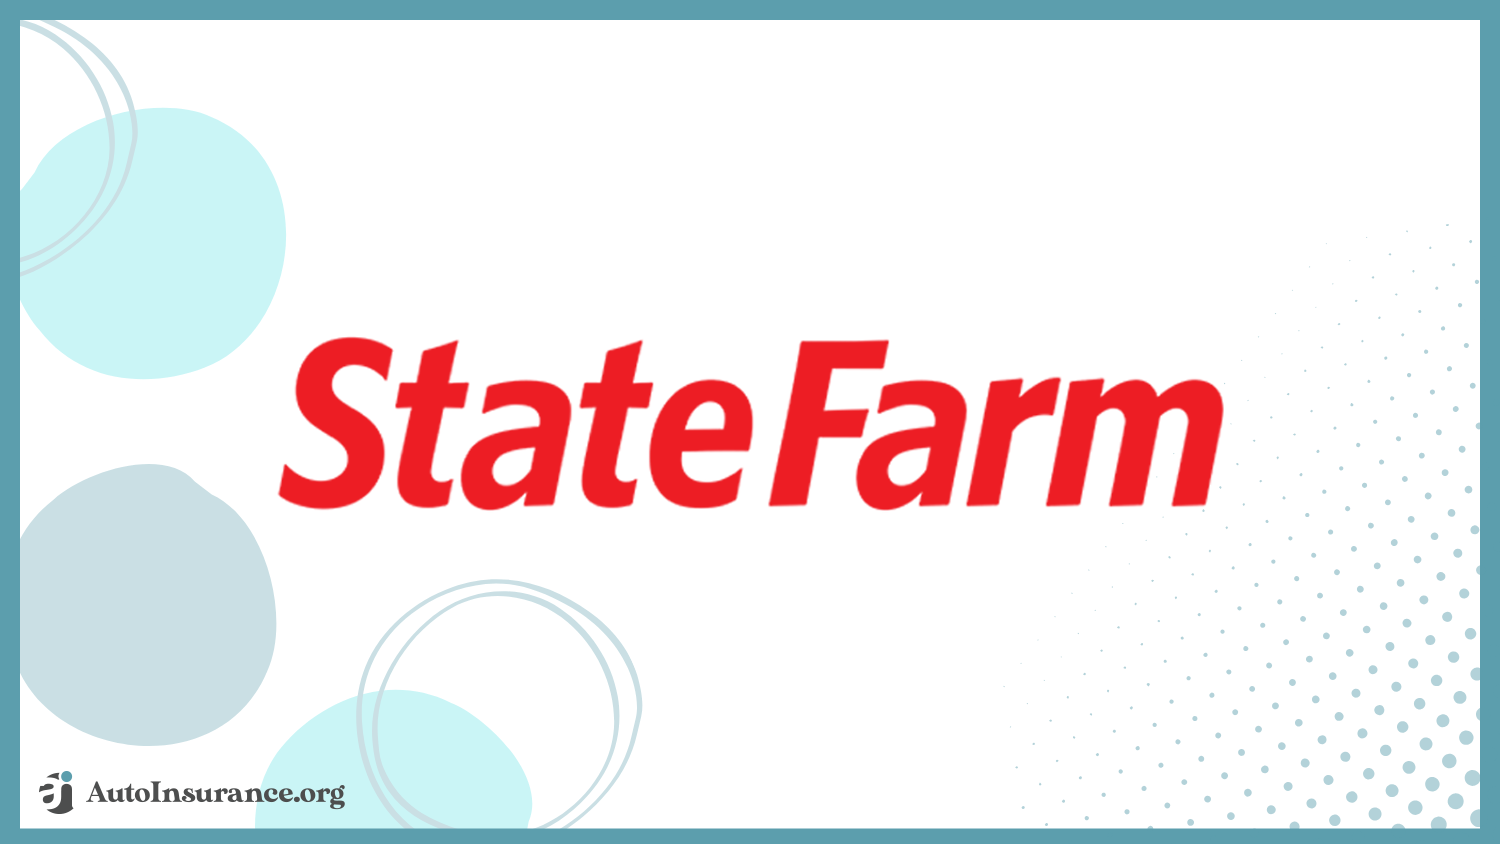 State Farm: Best Mitsubishi Mirage G4 Auto Insurance